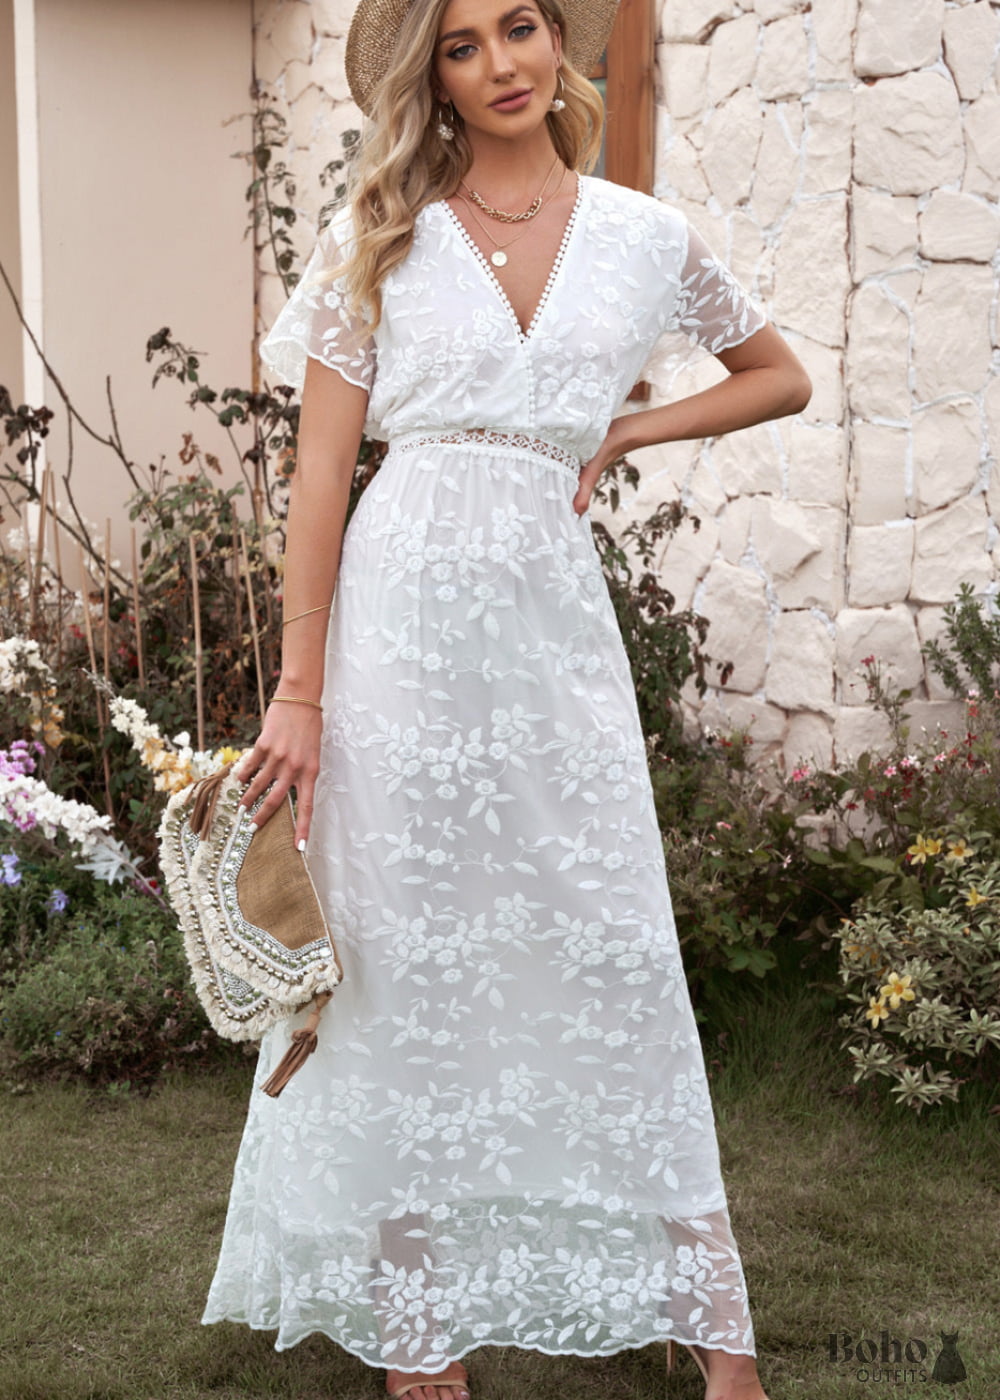 Boho White Floral Lace Dress Emma